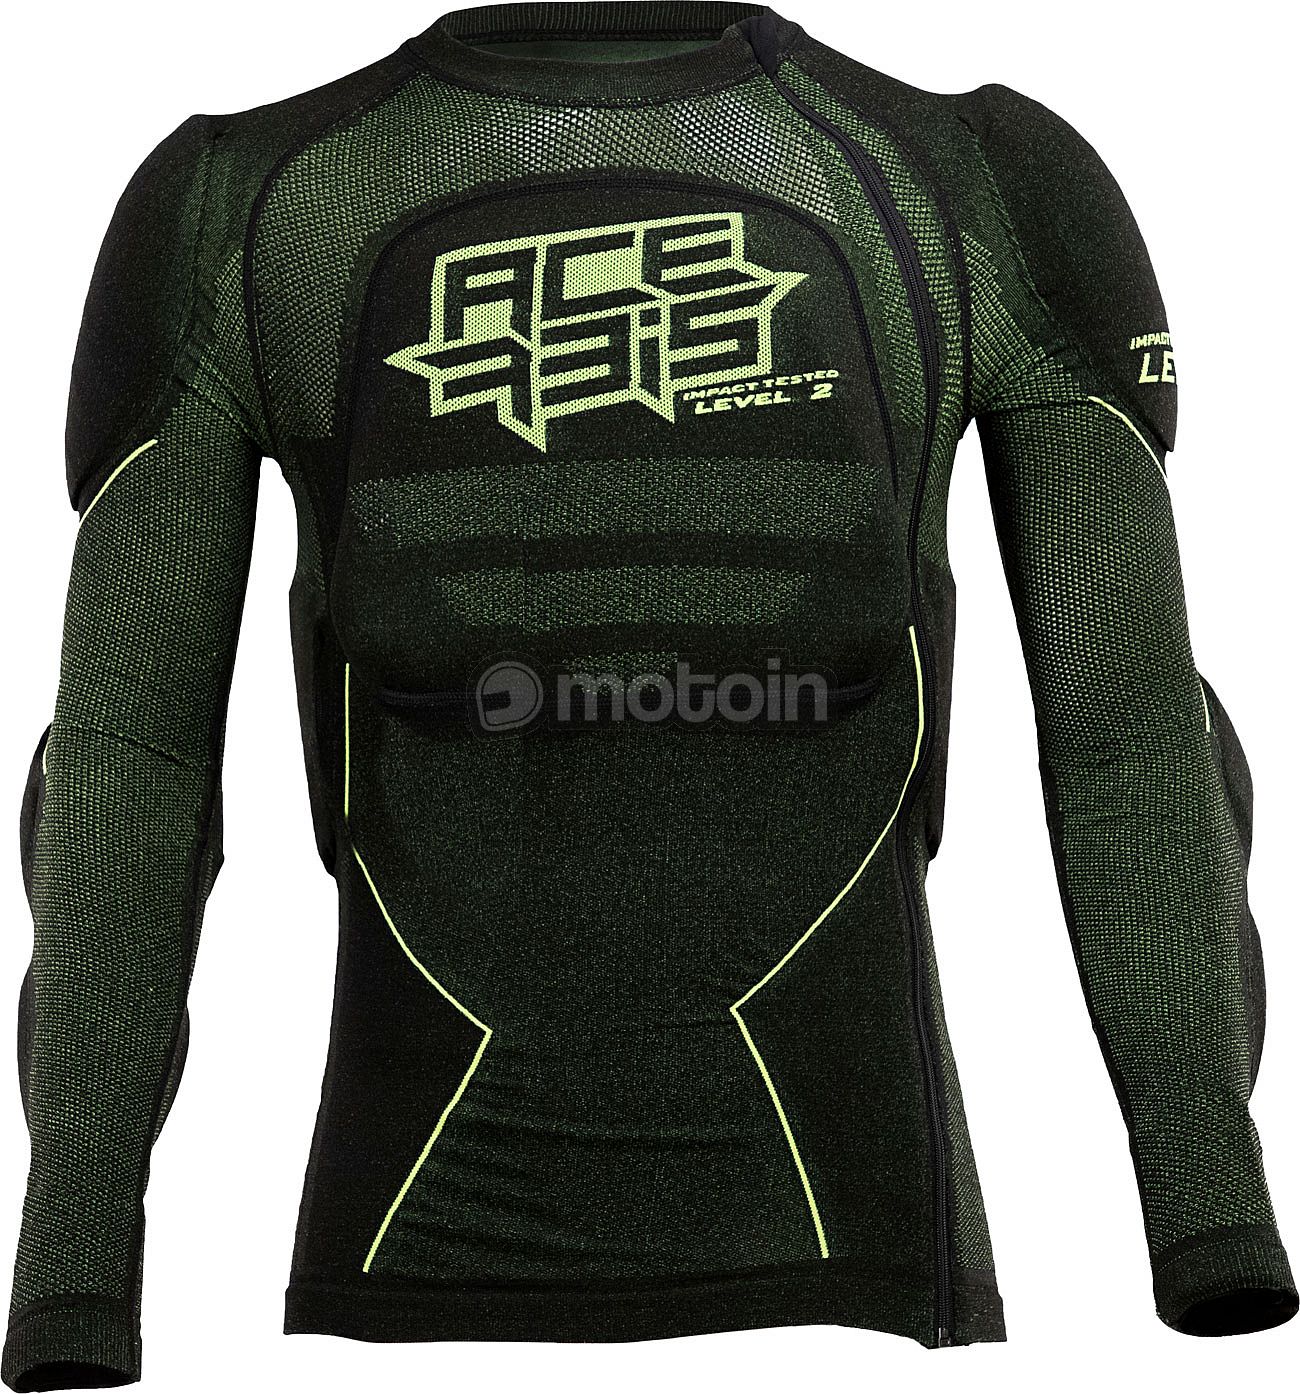 Acerbis X-Fit Future, protector shirt